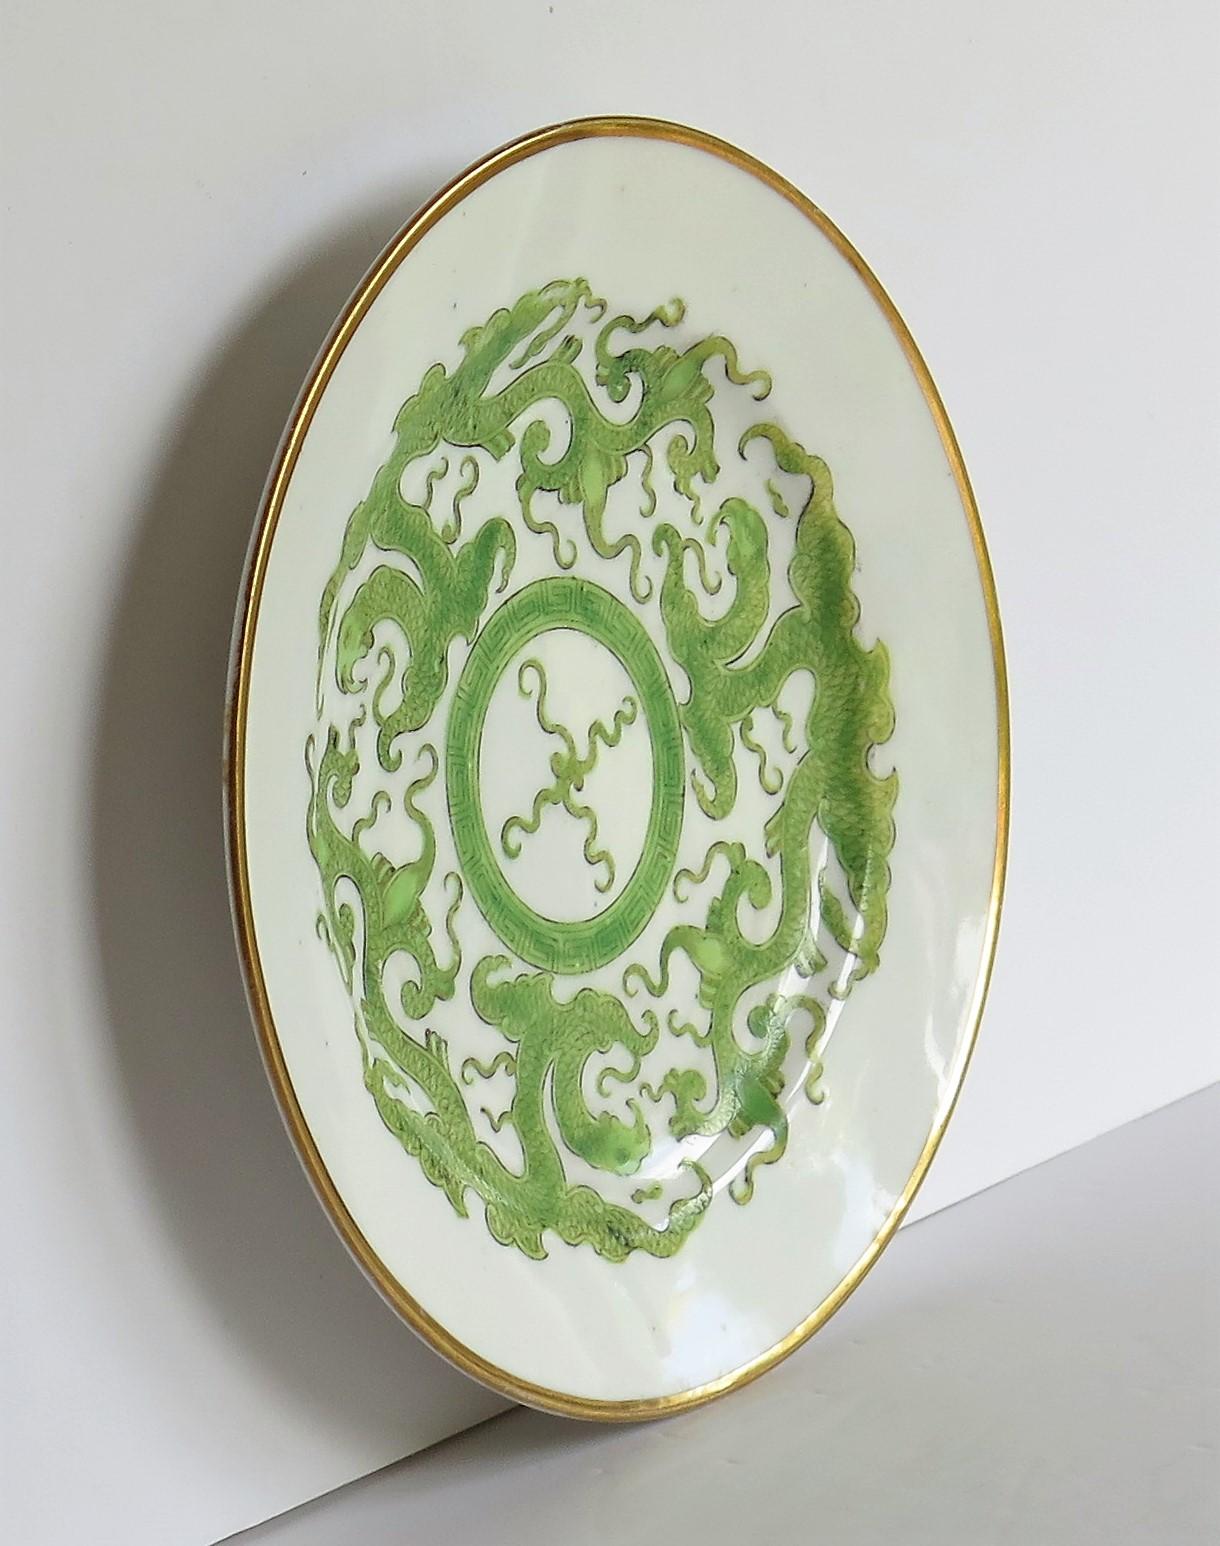 English Georgian Miles Mason Porcelain Plate in Green Chinese Dragon Pattern, circa 1808